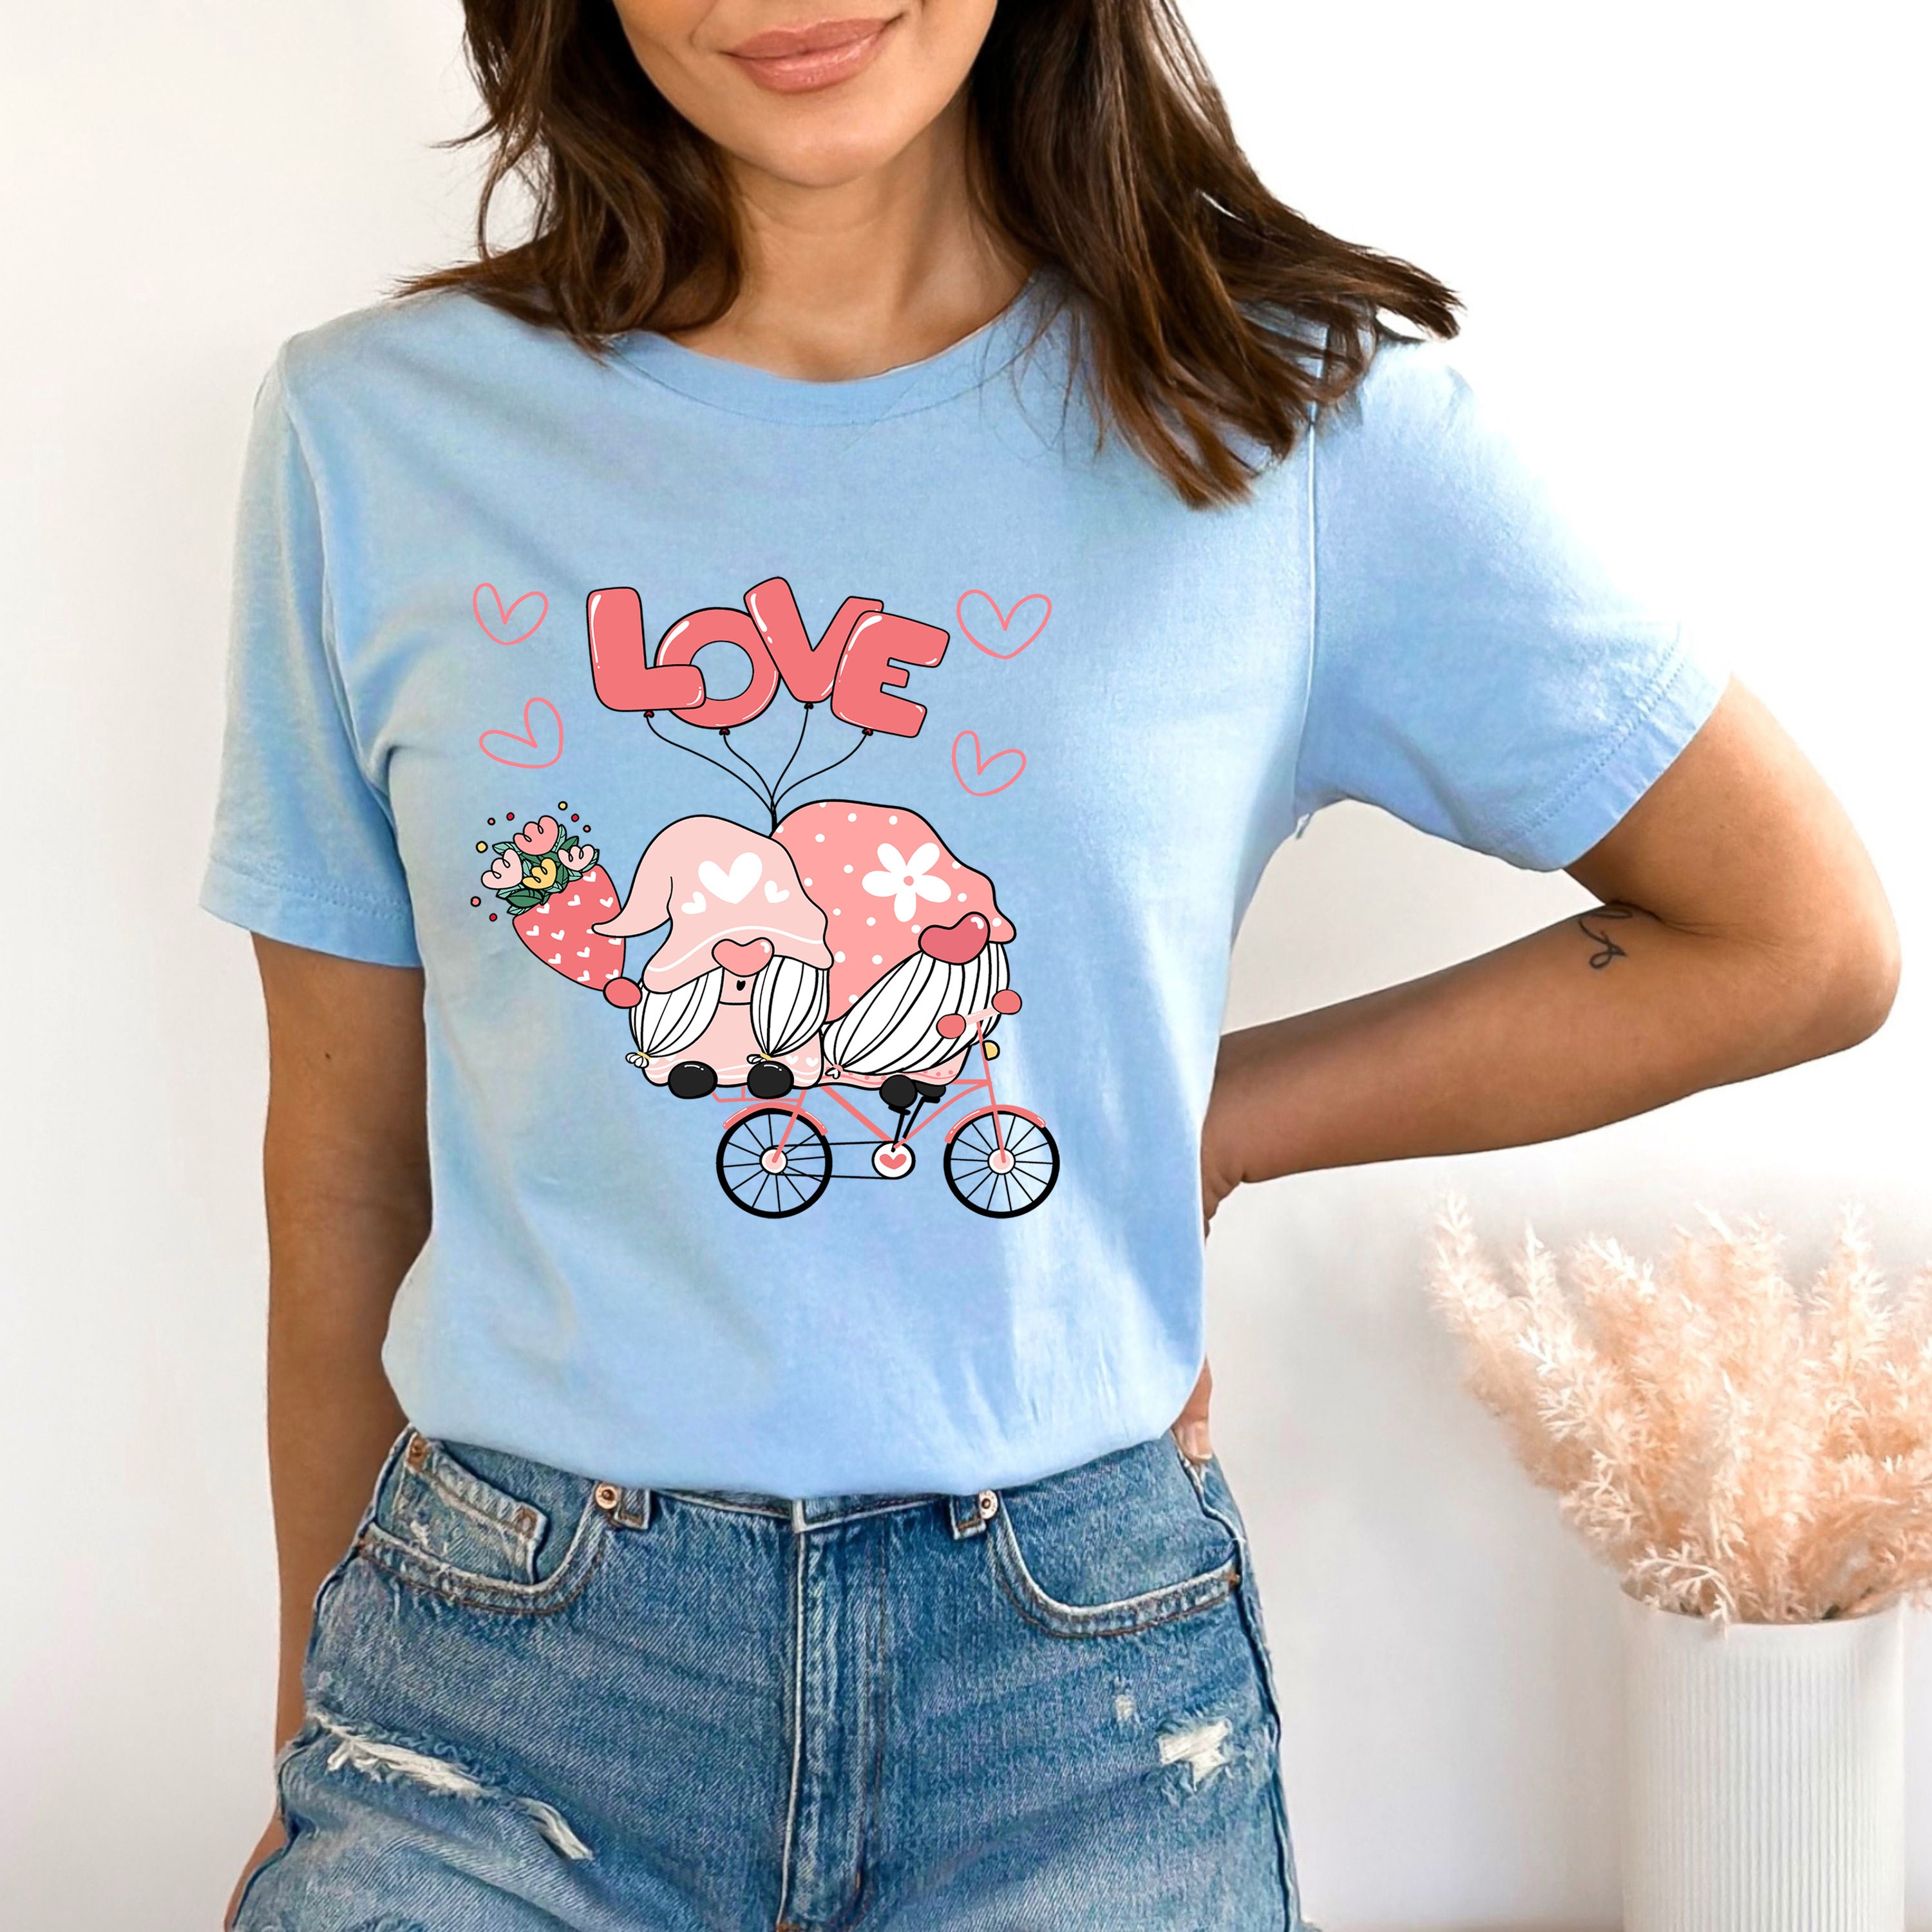 Love gnomes( Valentine t shirt)  - Bella canvas